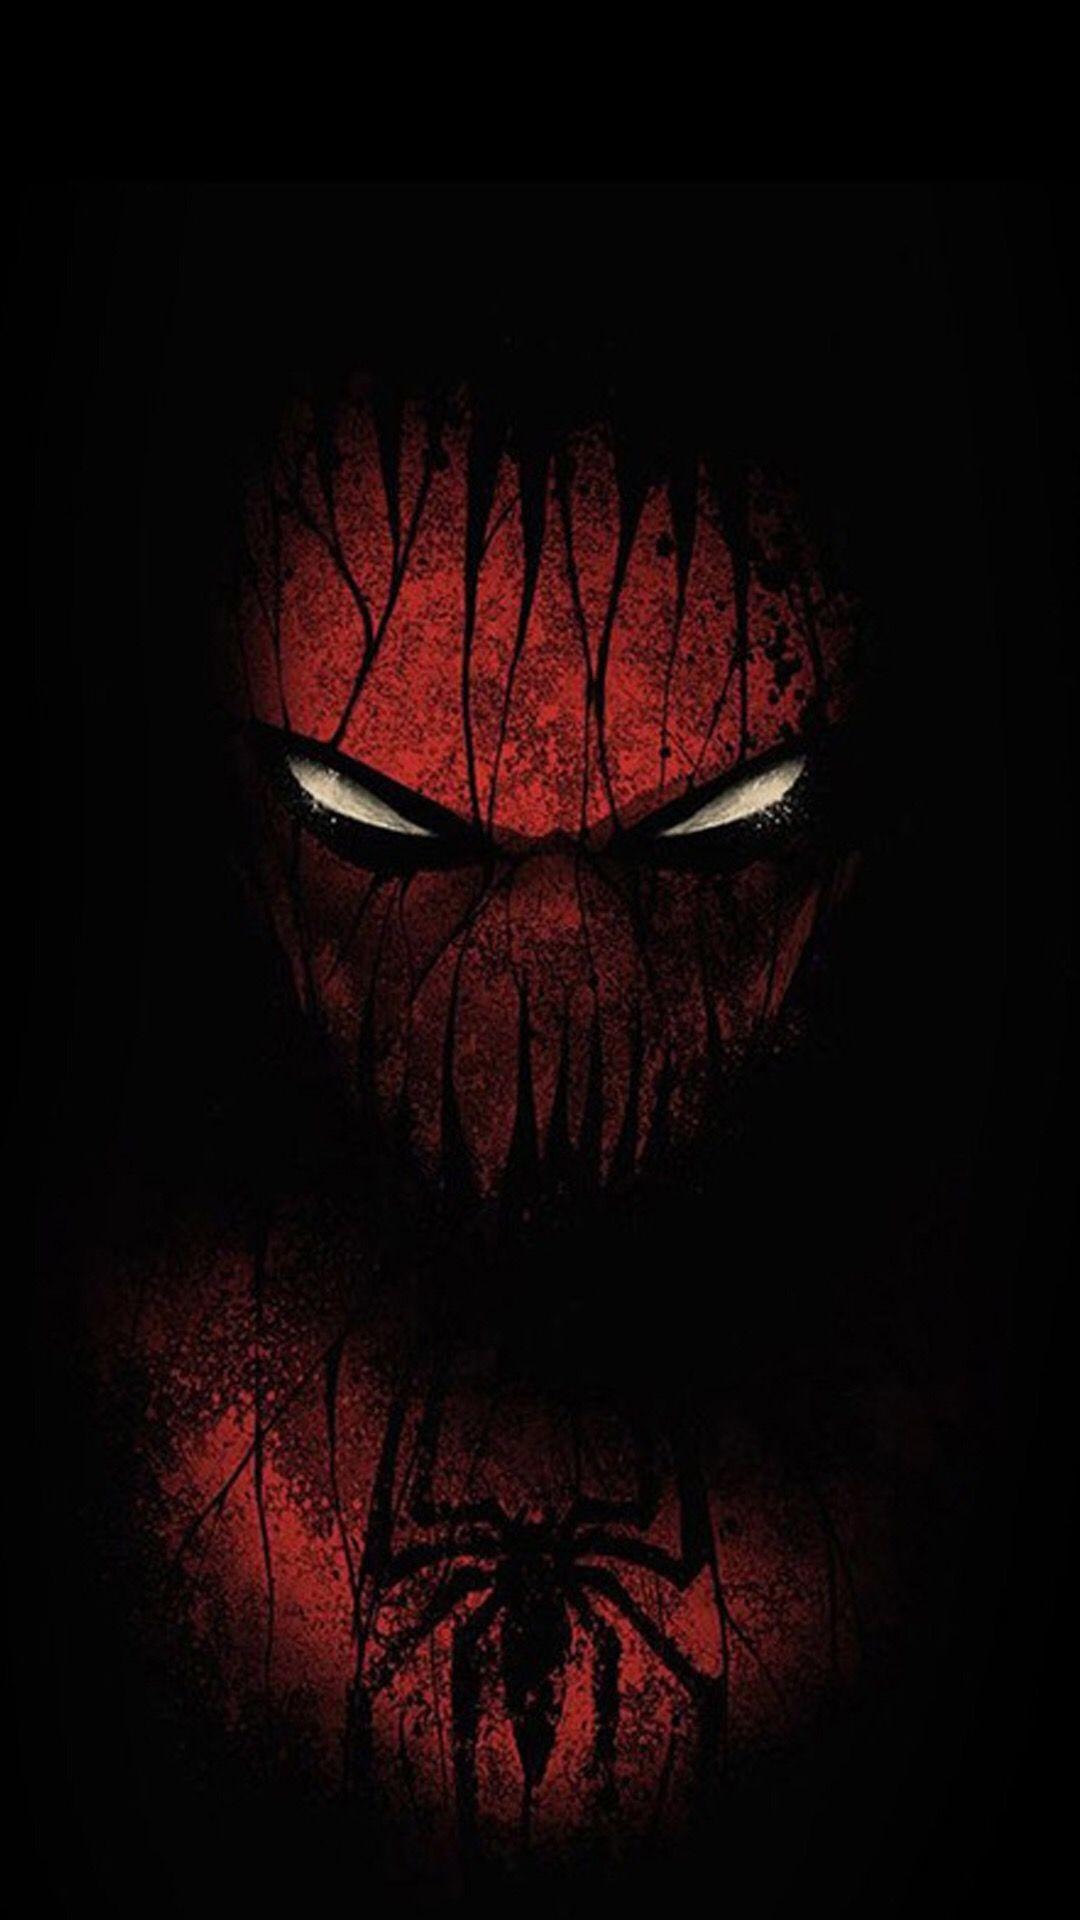 Amazing Spiderman Phone Wallpaper